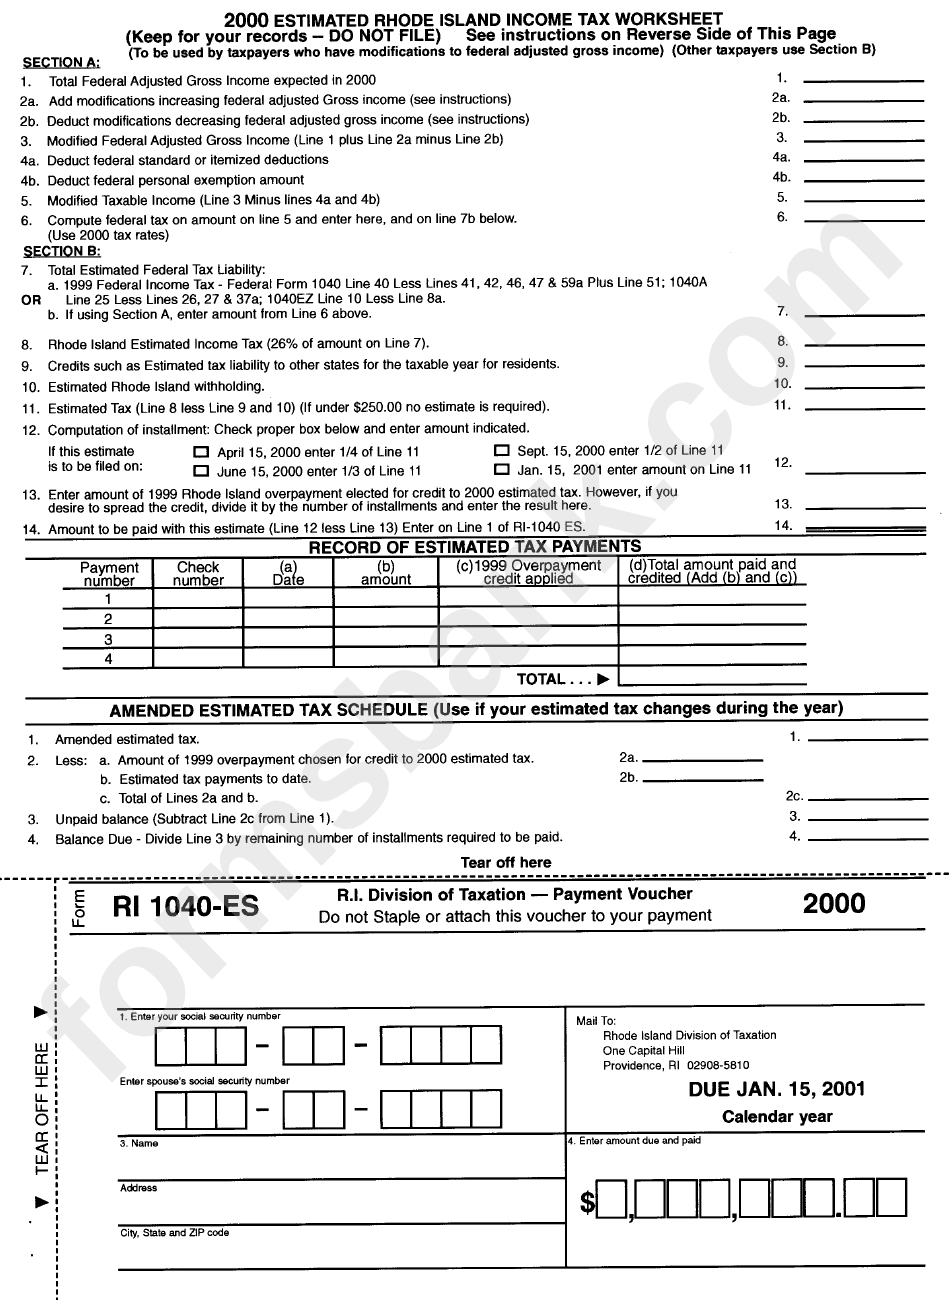 Form Ri 1040-Es - R.i. Division Of Taxation - Payment Voucher - 2000